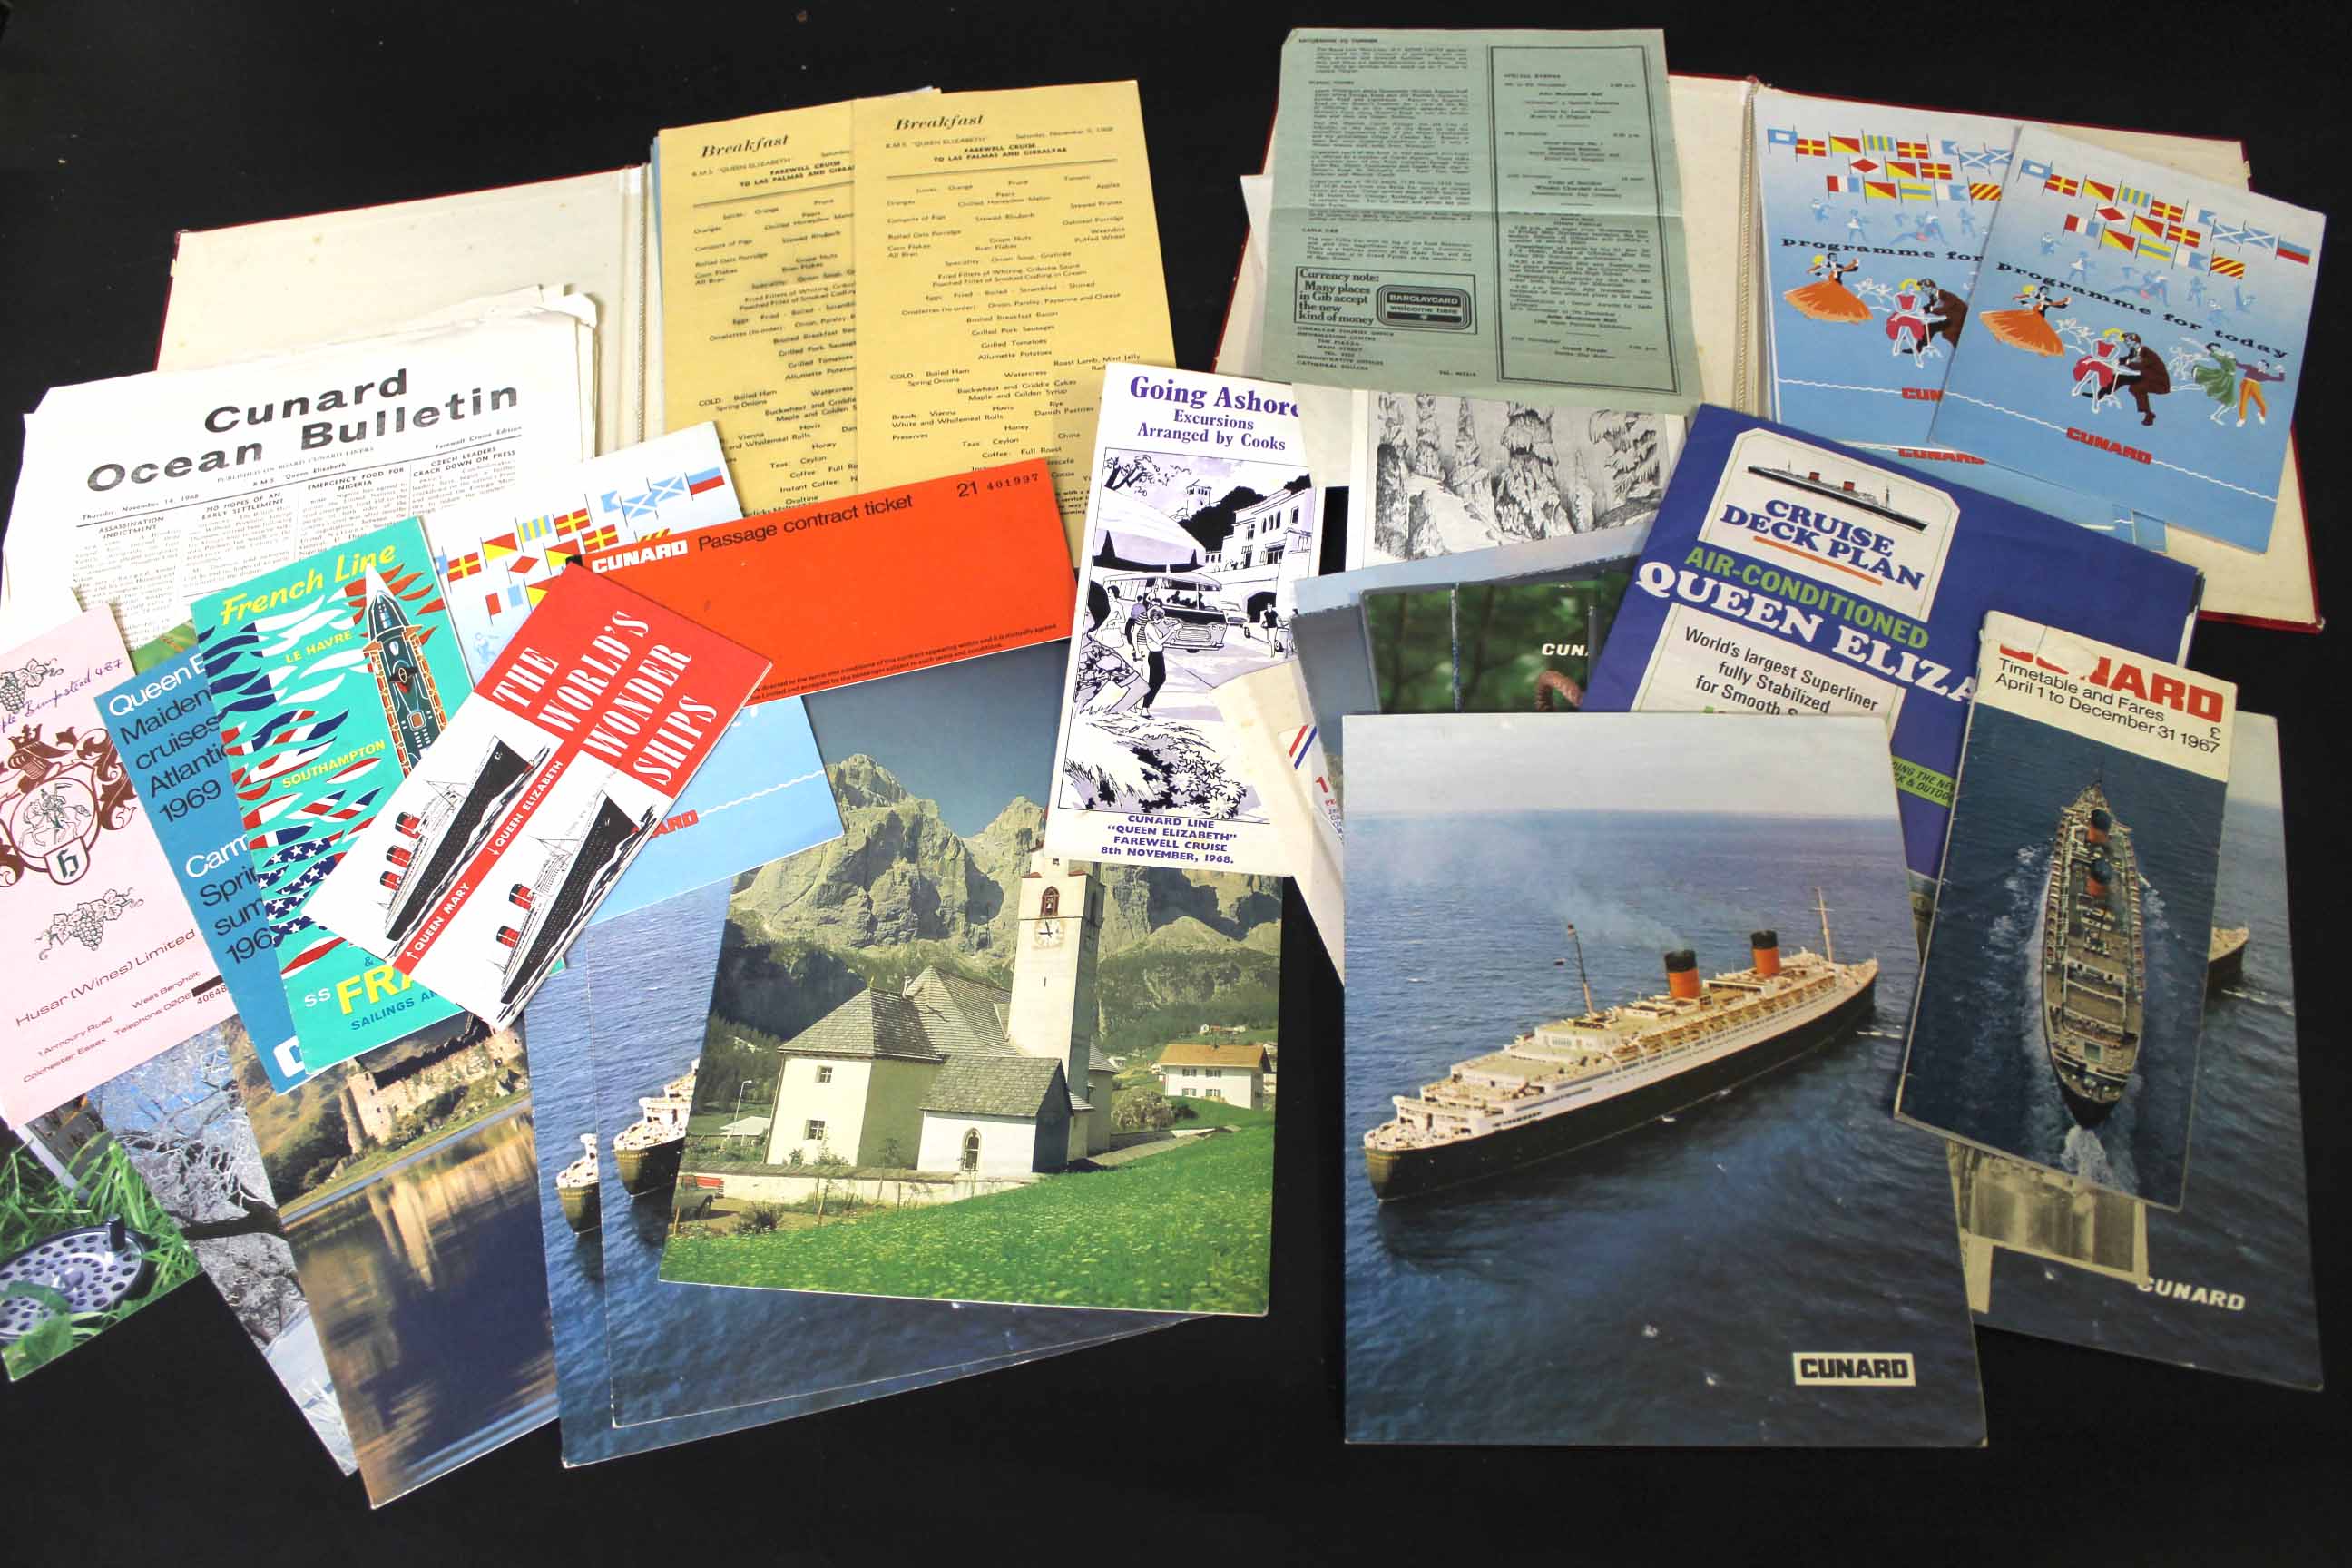 Packet Cunard RMS "Queen Elizabeth" 1968 final cruise menu cards, programmes, relevant ephemera